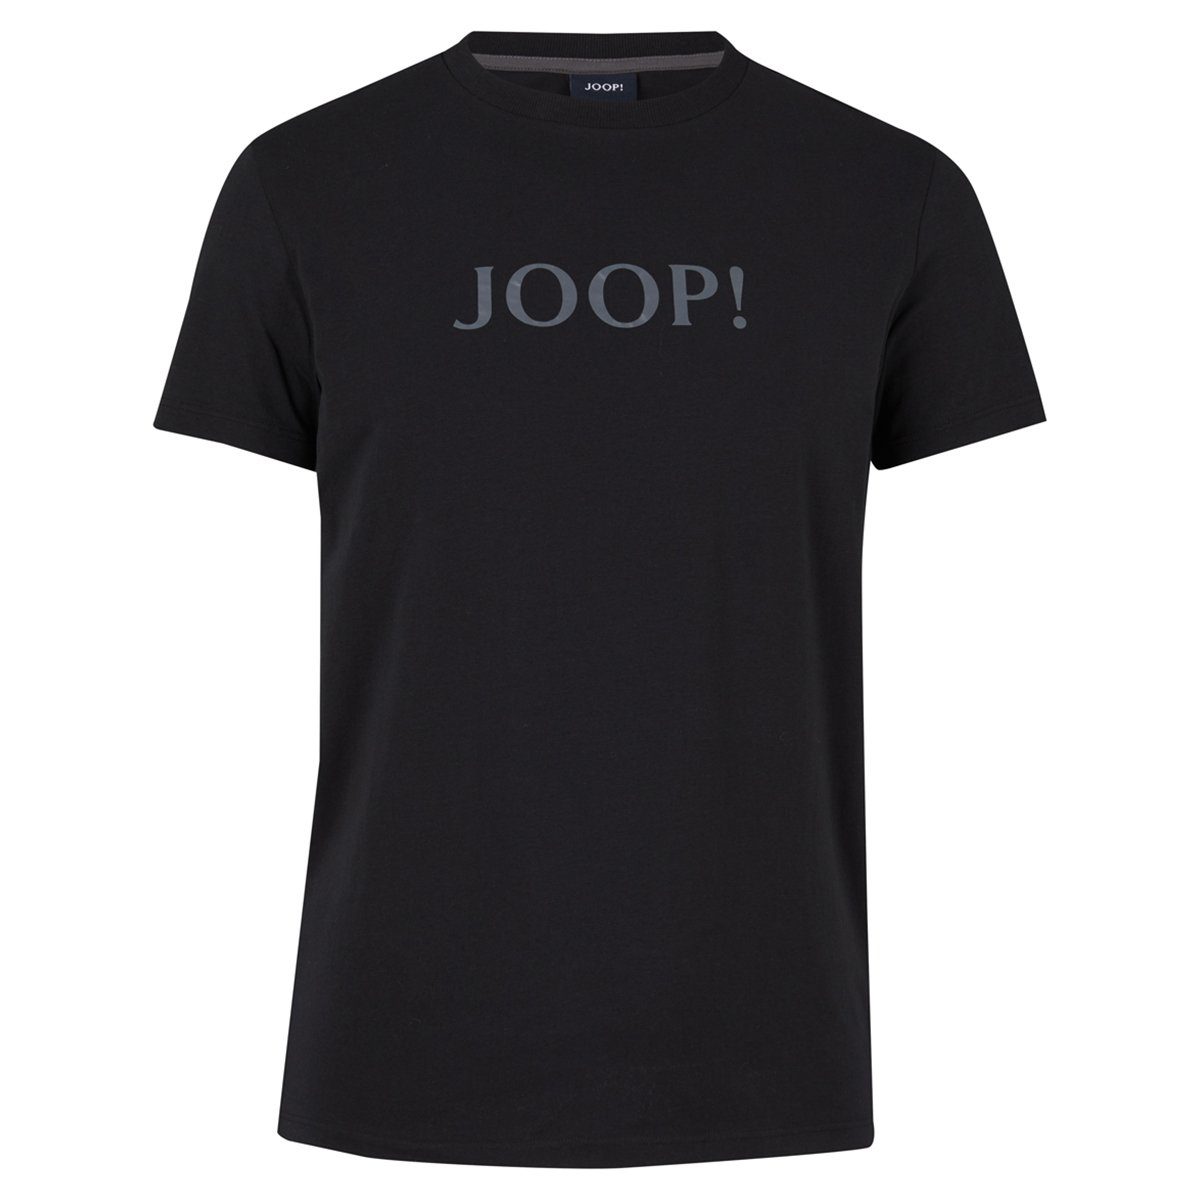 Joop! T-Shirt Herren T-Shirt Halbarm Loungewear, Schwarz Rundhals, 